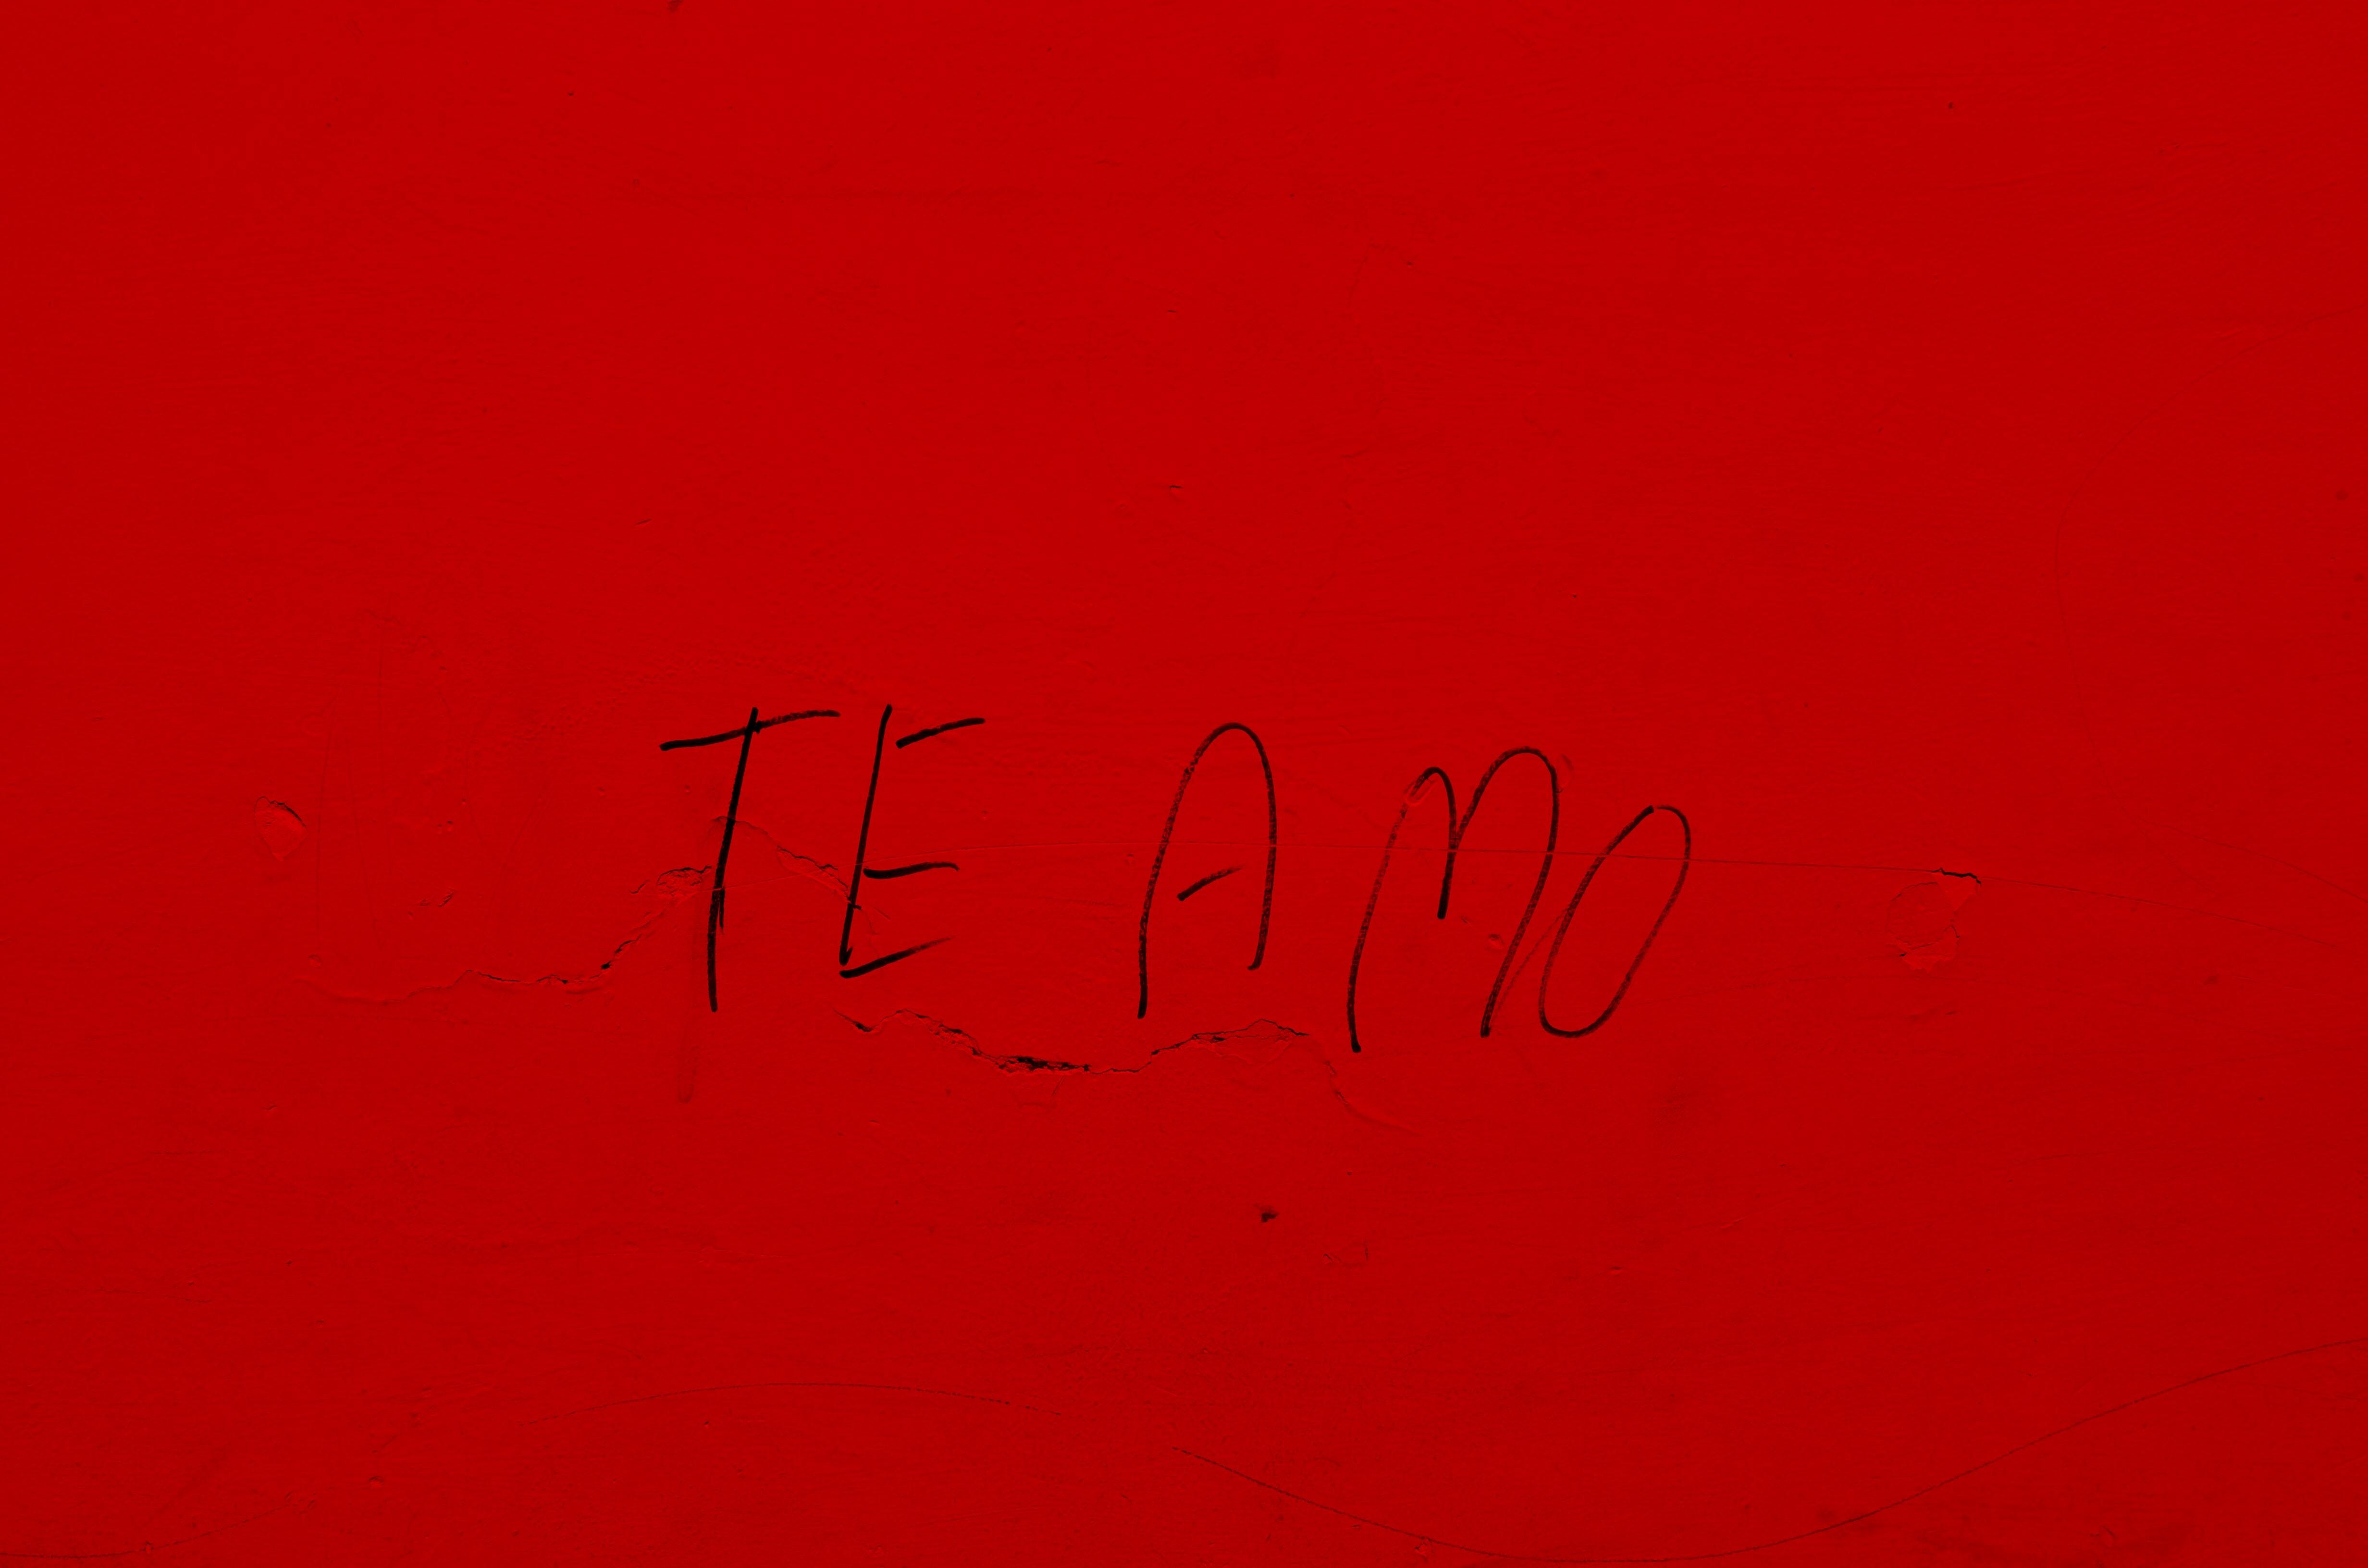 Free of amor, graffiti, handwritten